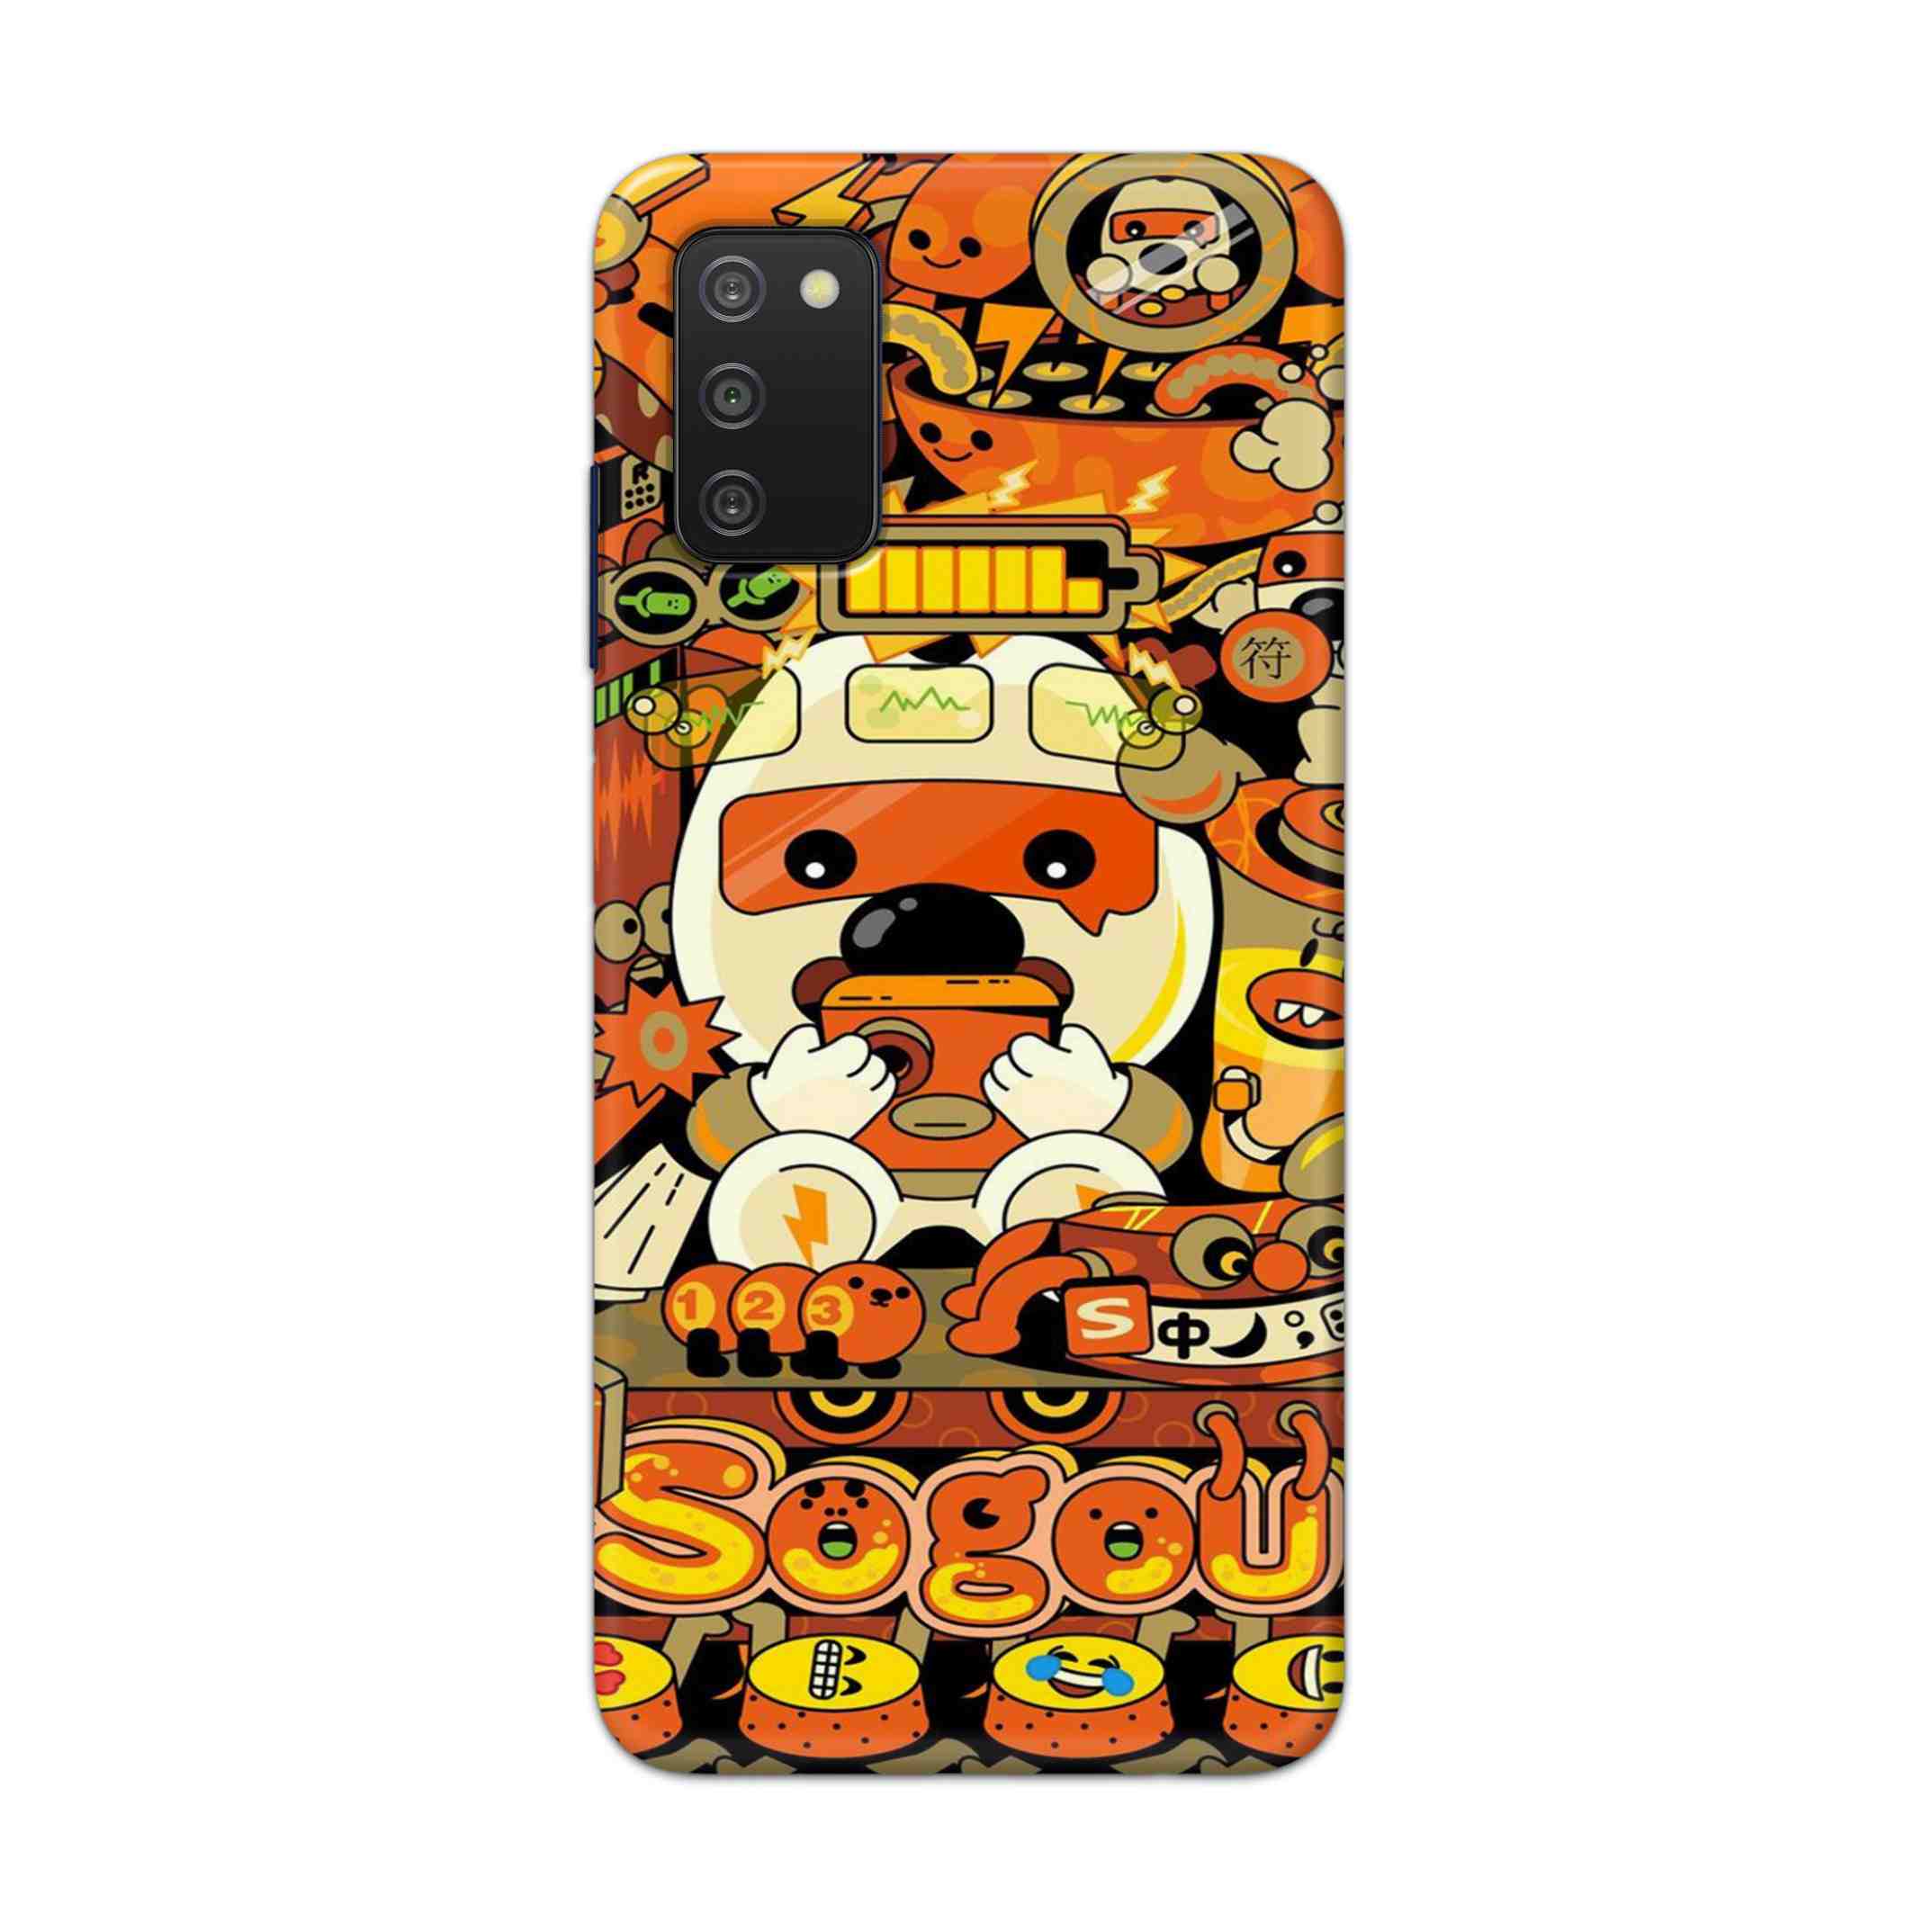 Buy Sogou Hard Back Mobile Phone Case Cover For Samsung A03s Online